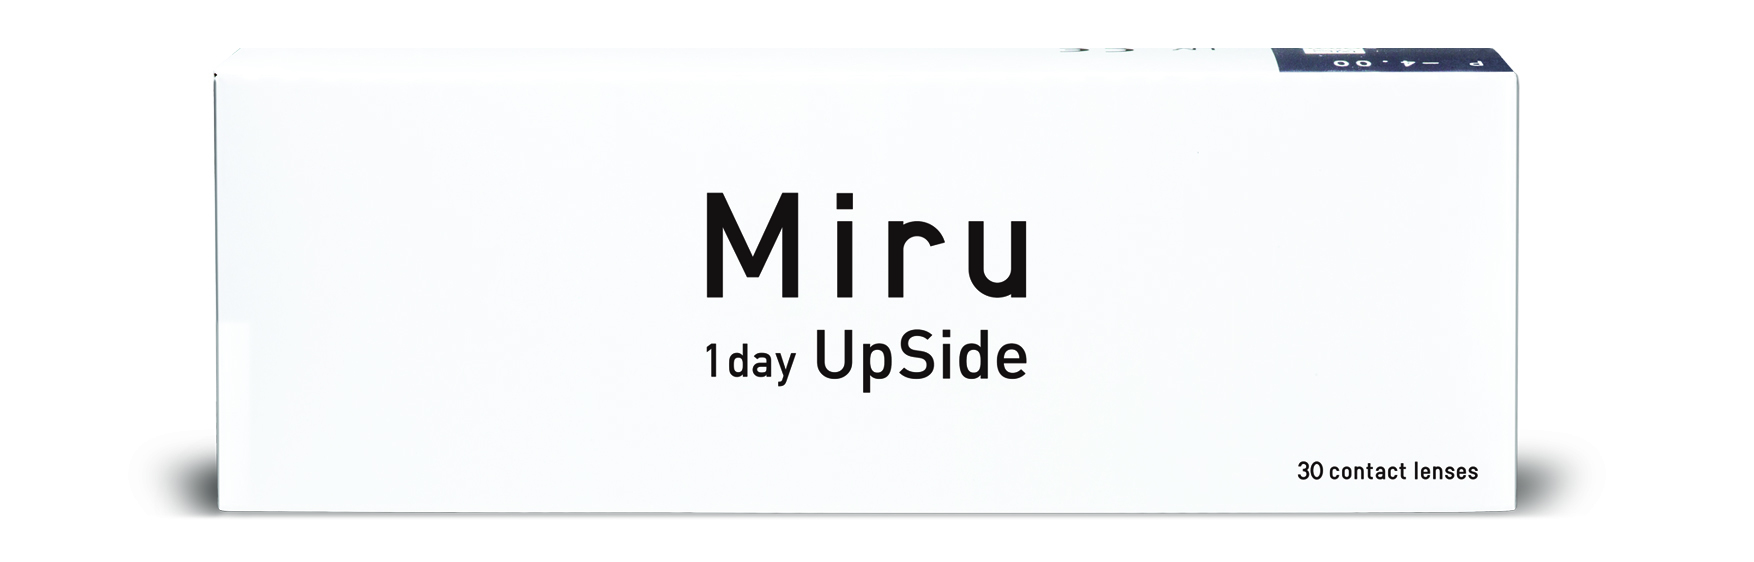 Front Miru 1 day Upside 30